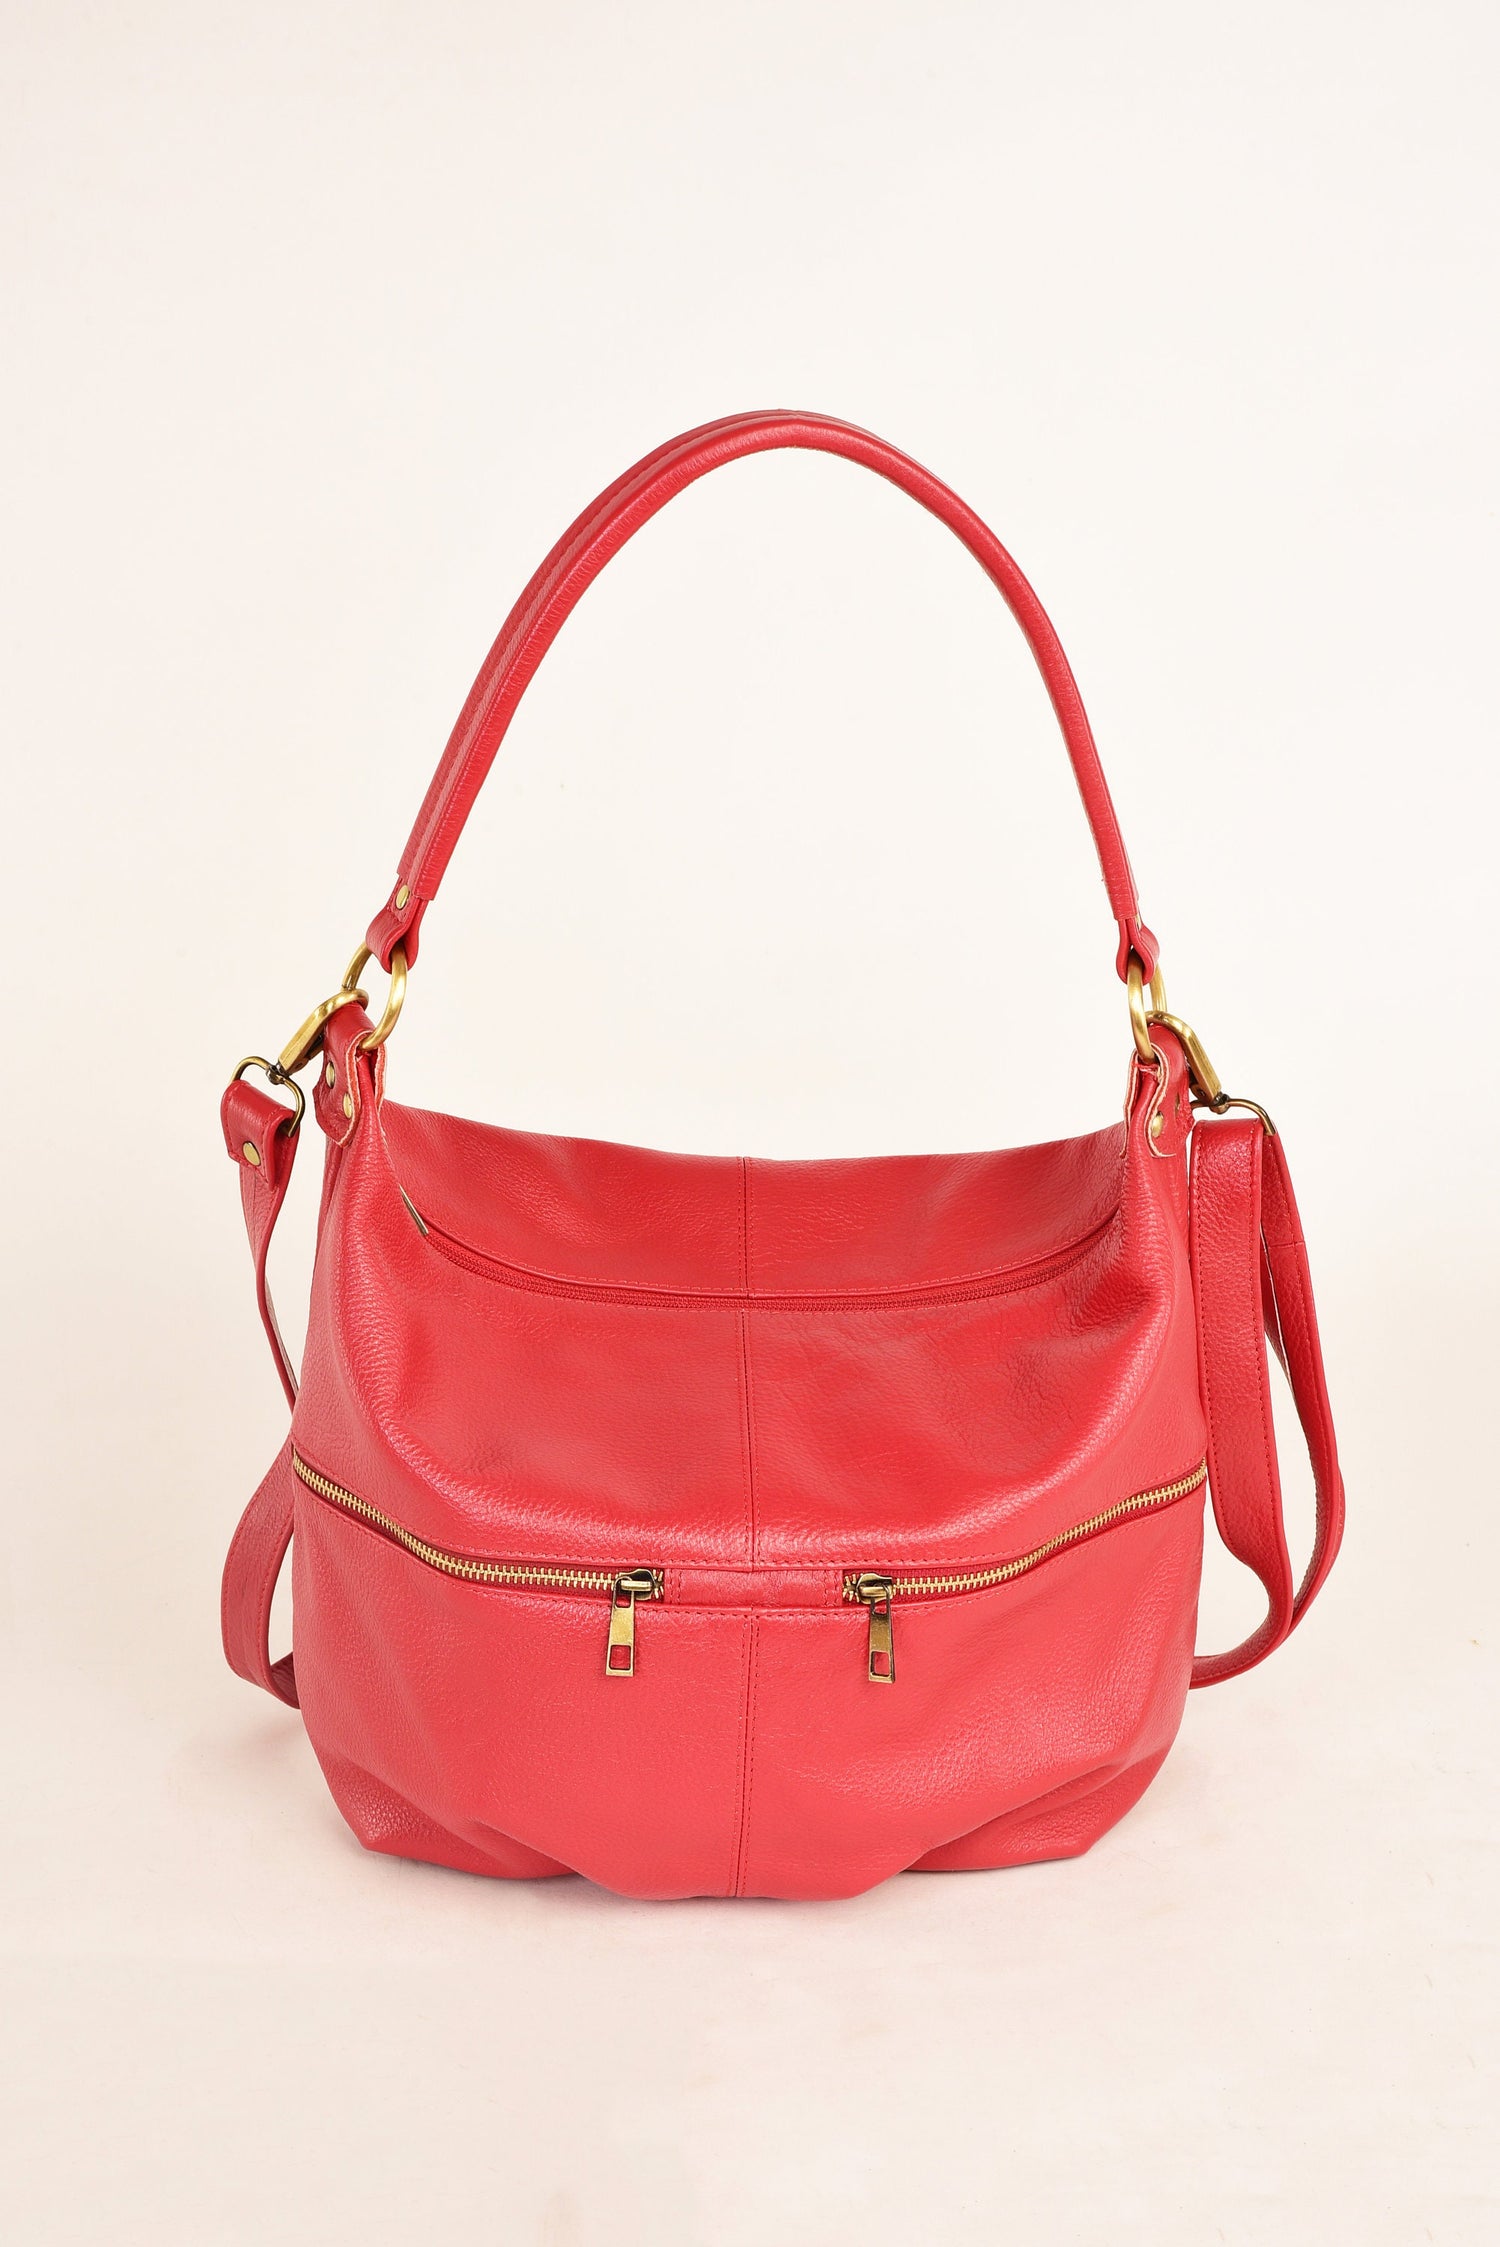 Buy Fossil Dawson Women's Handbag (Red Multi) at Amazon.in